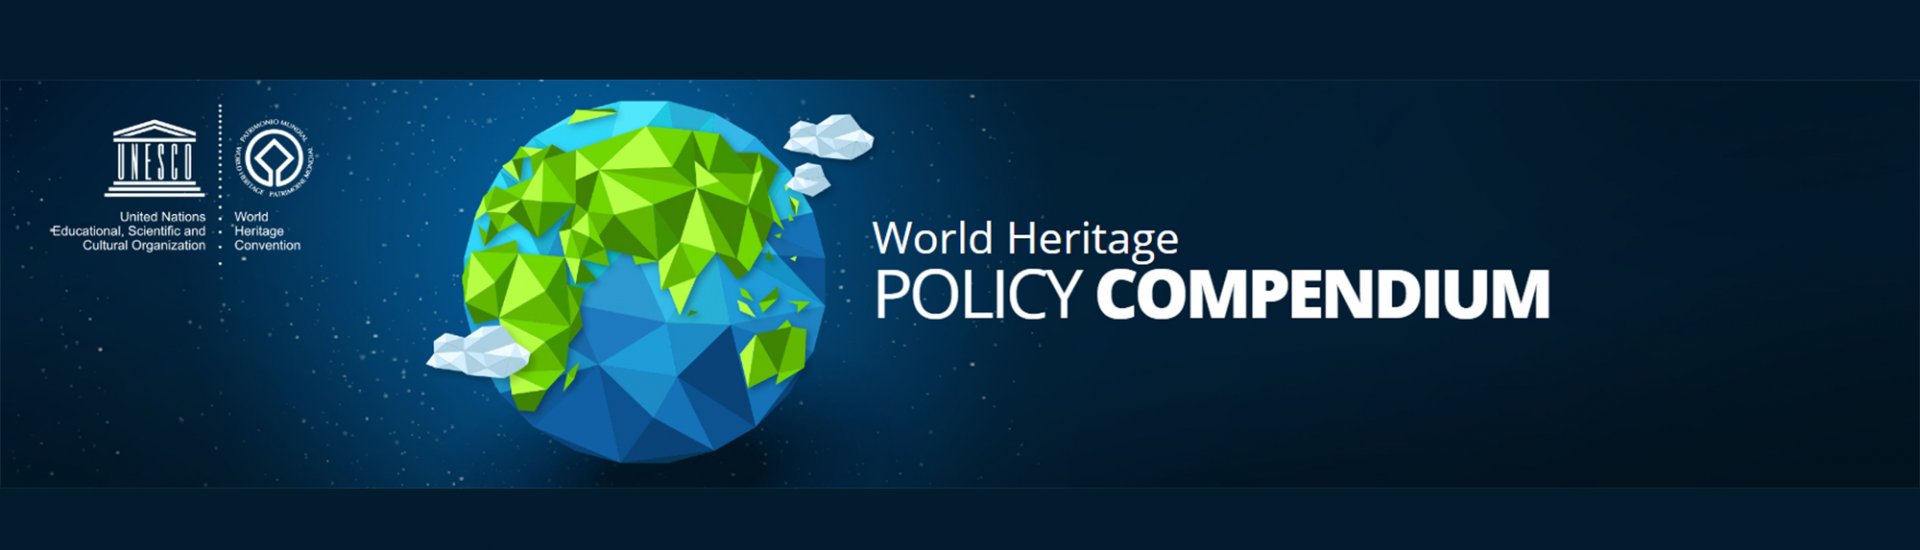 World Heritage Policy Compendium